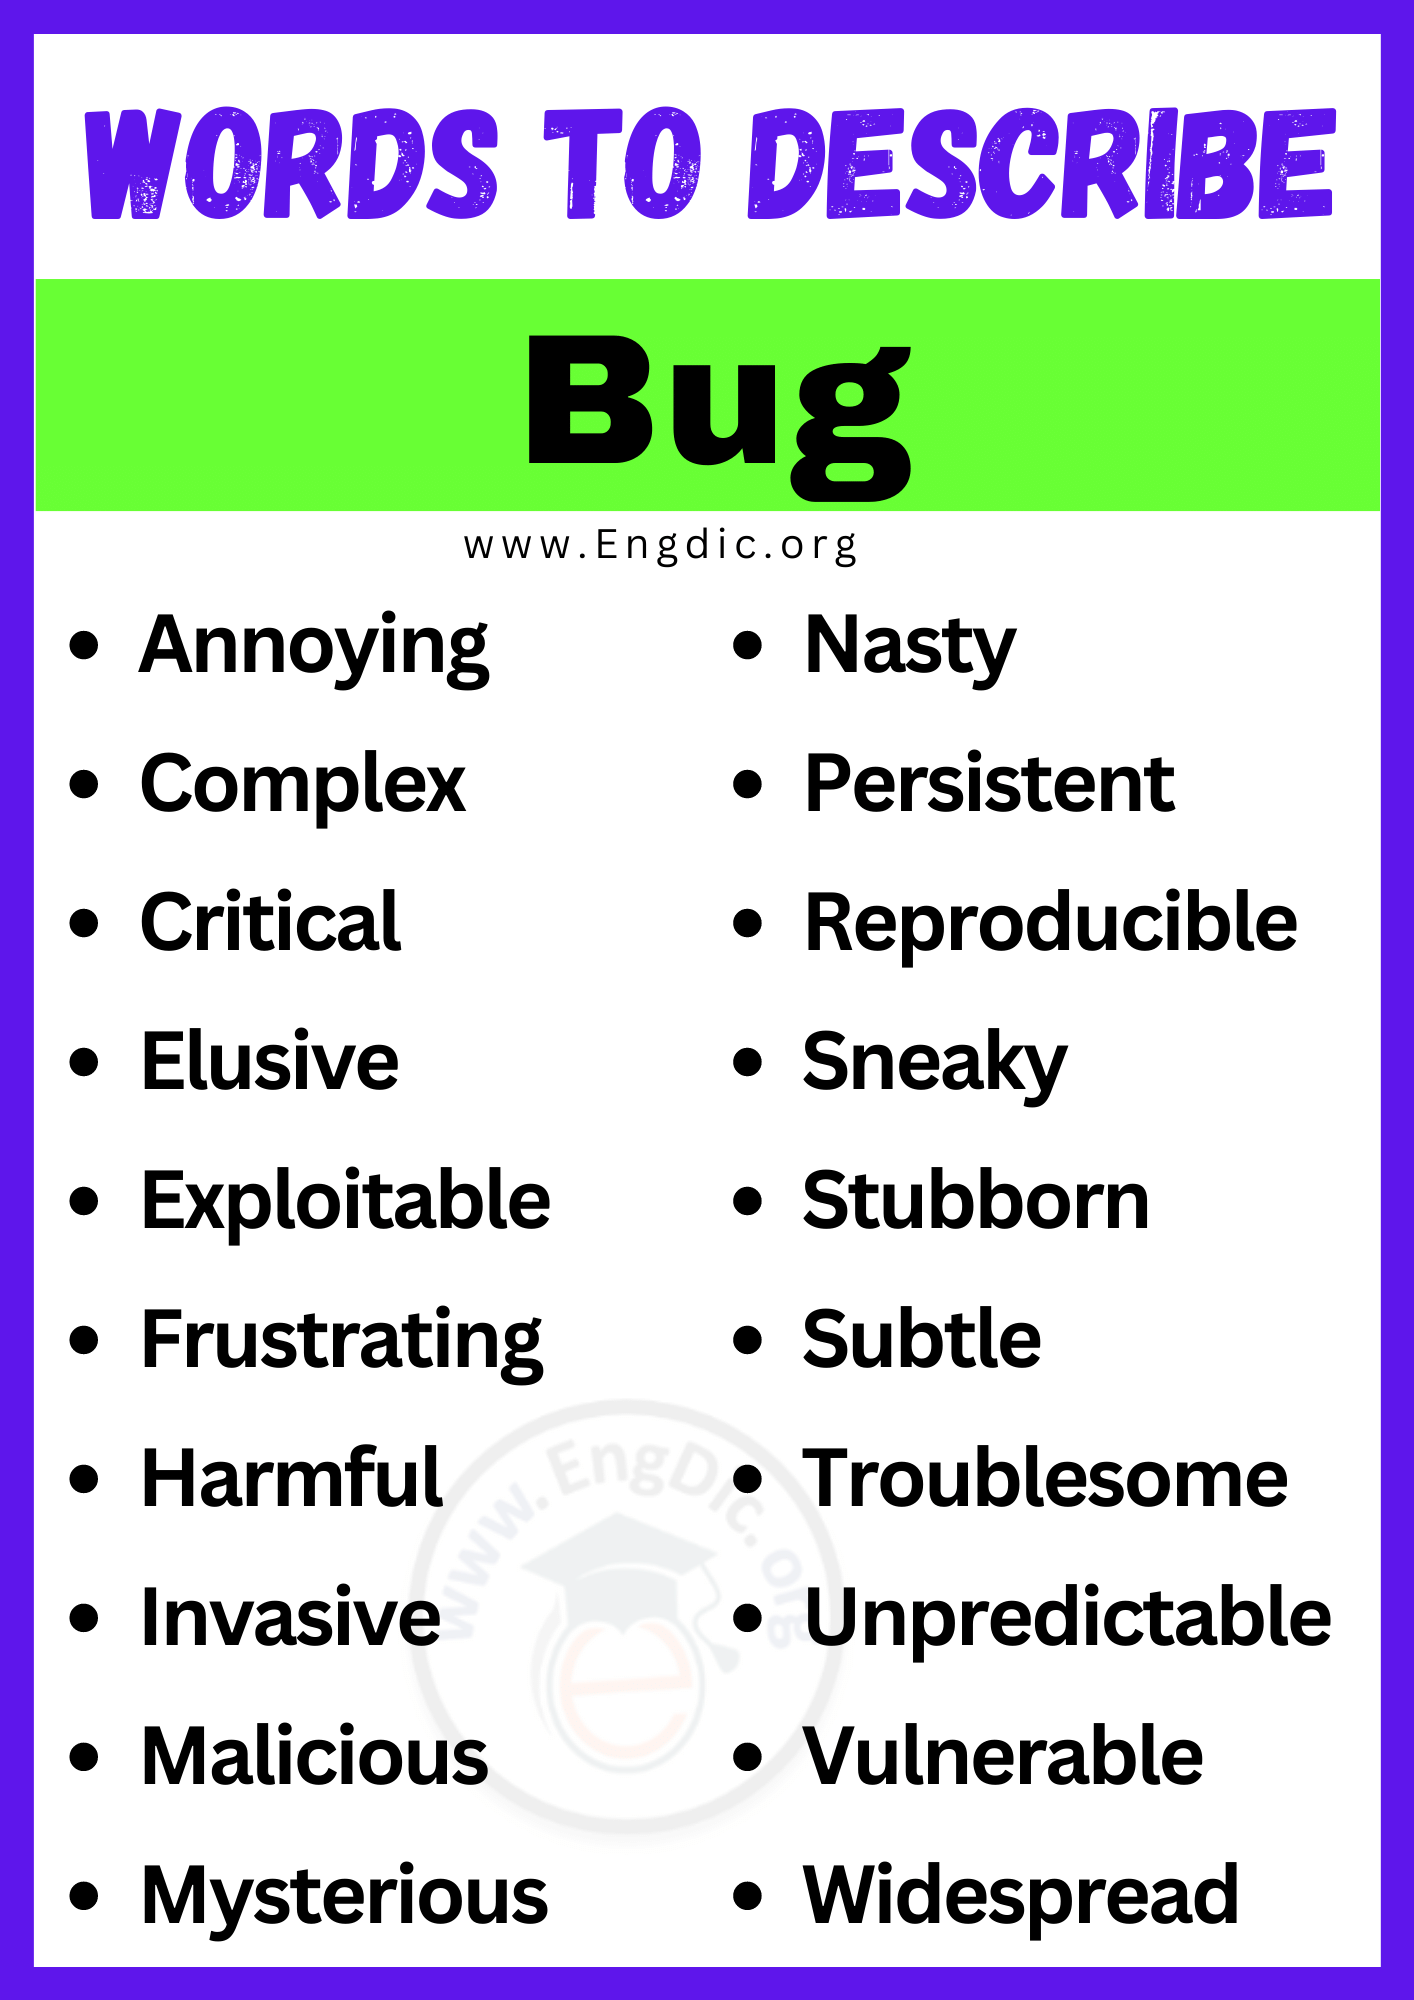 Words to Describe Bug